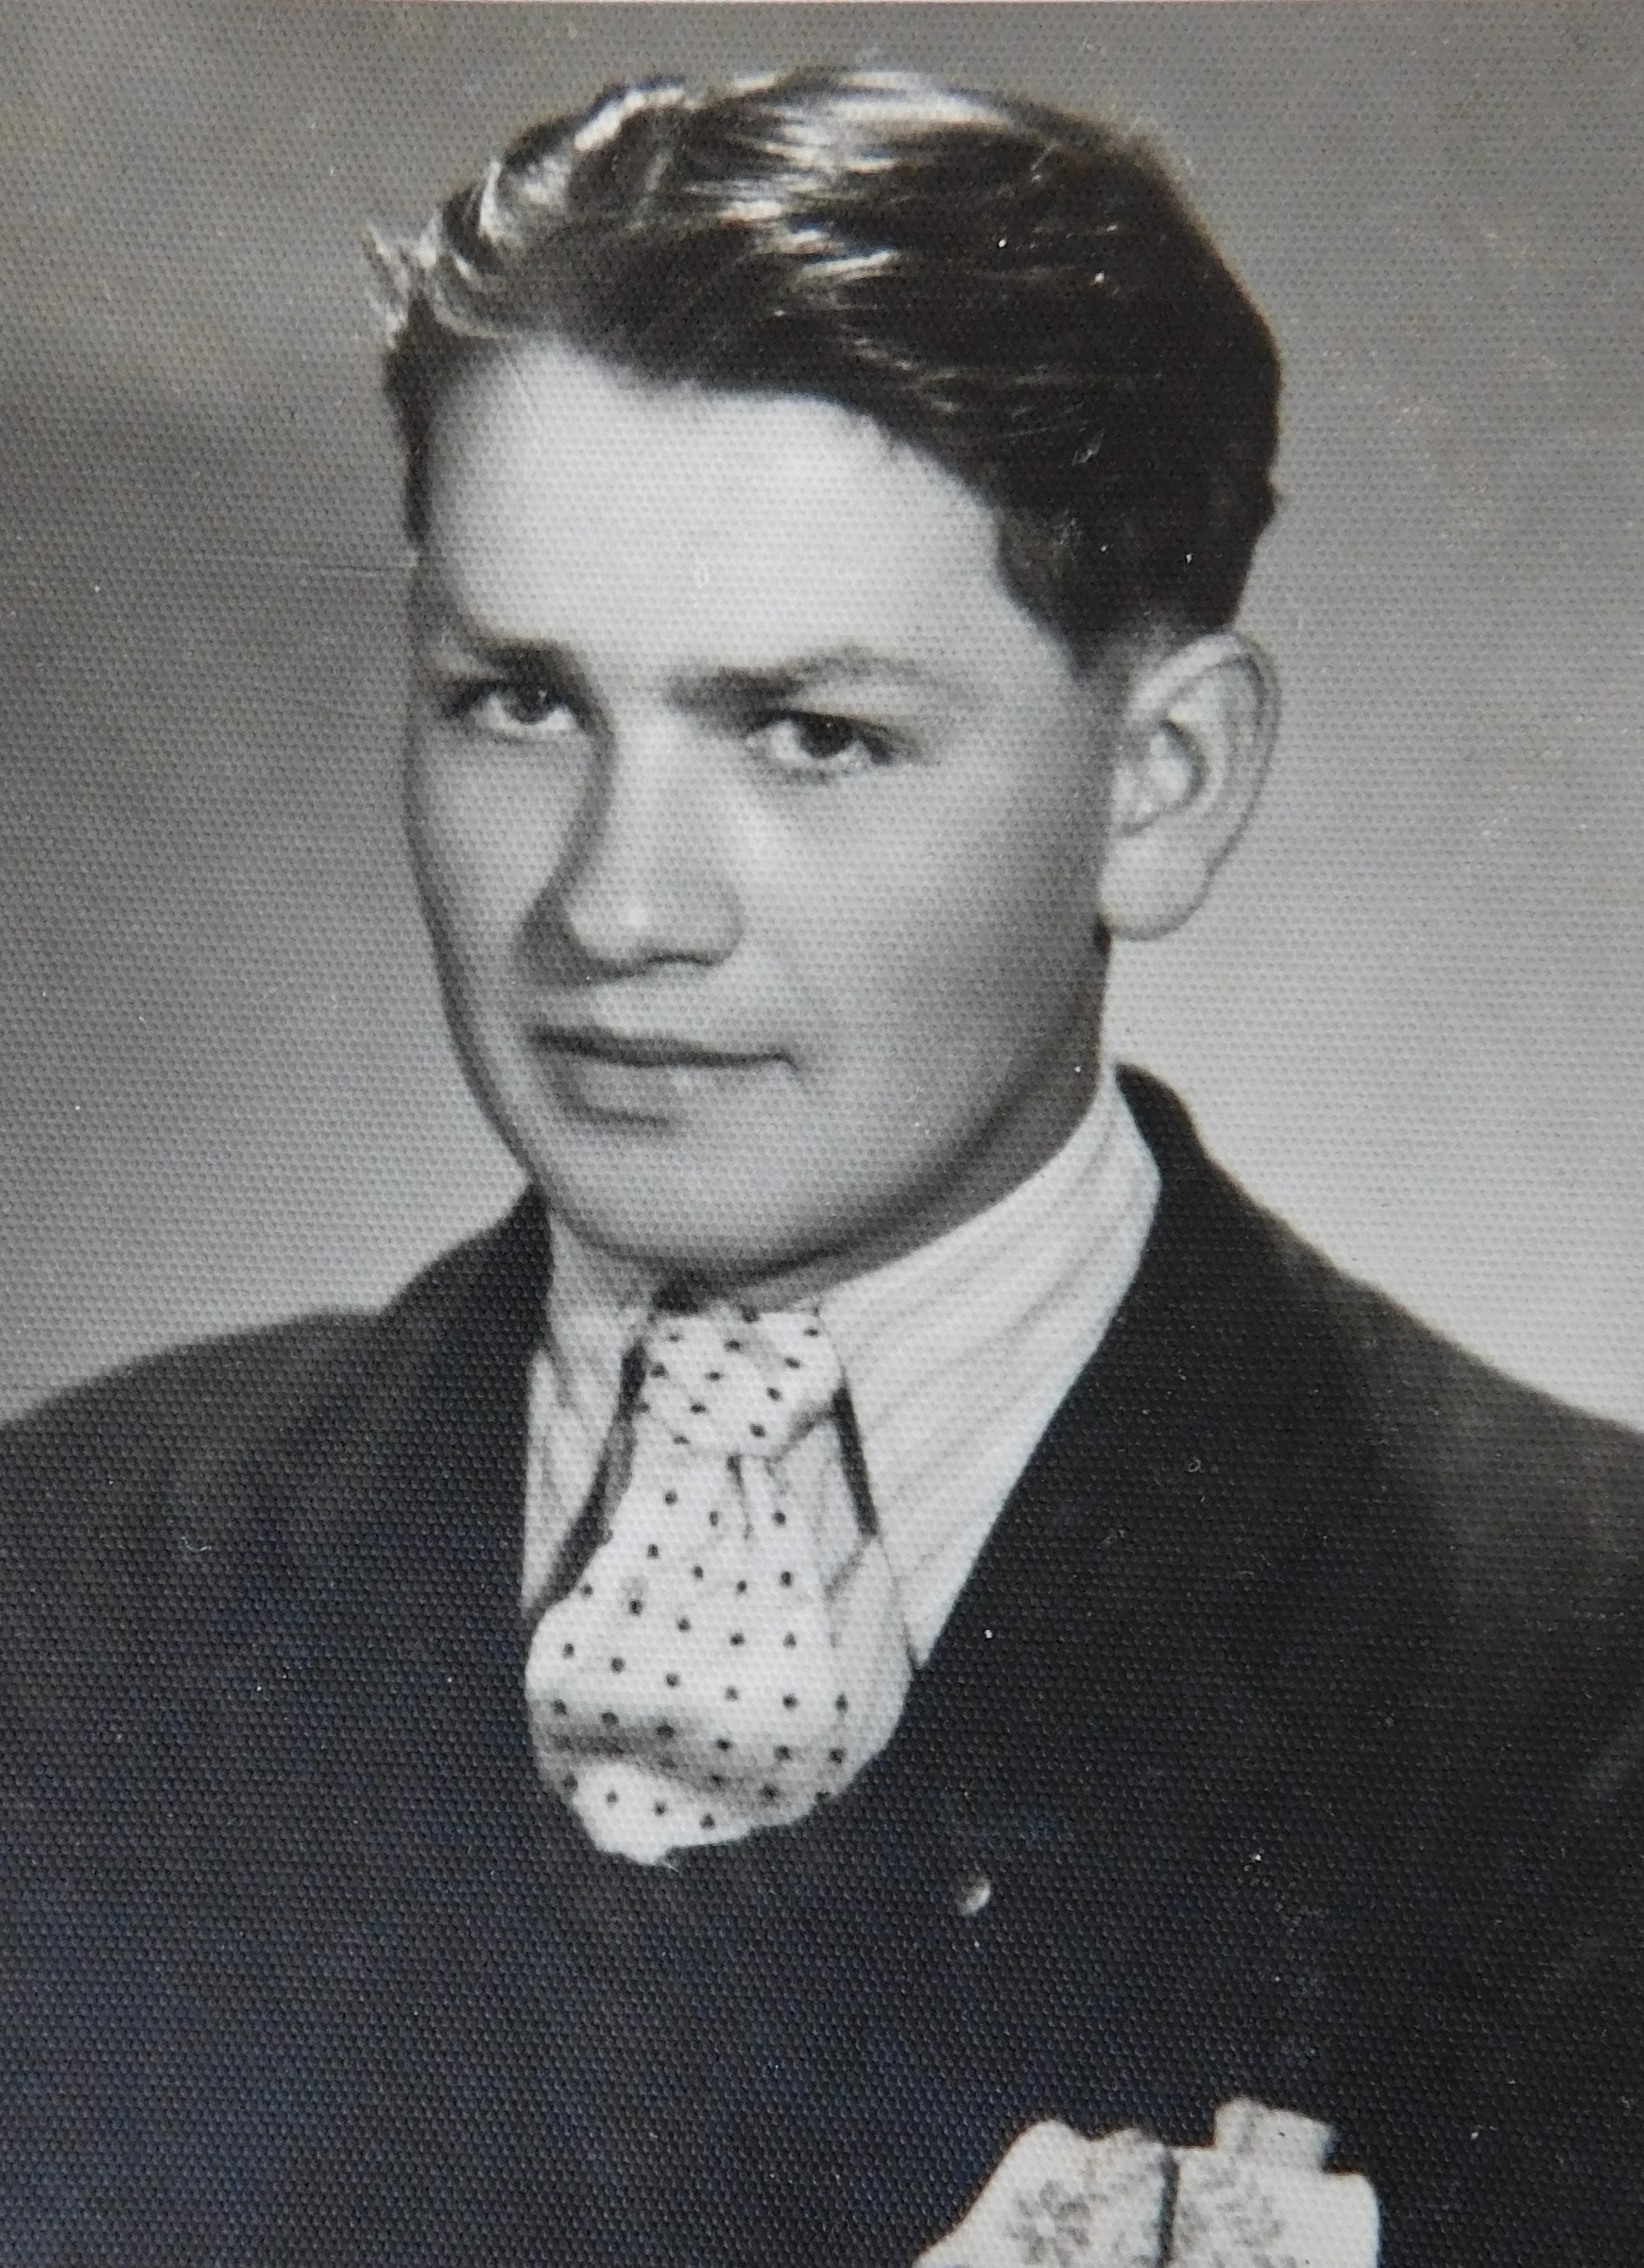 Pavel Bednár in 1943